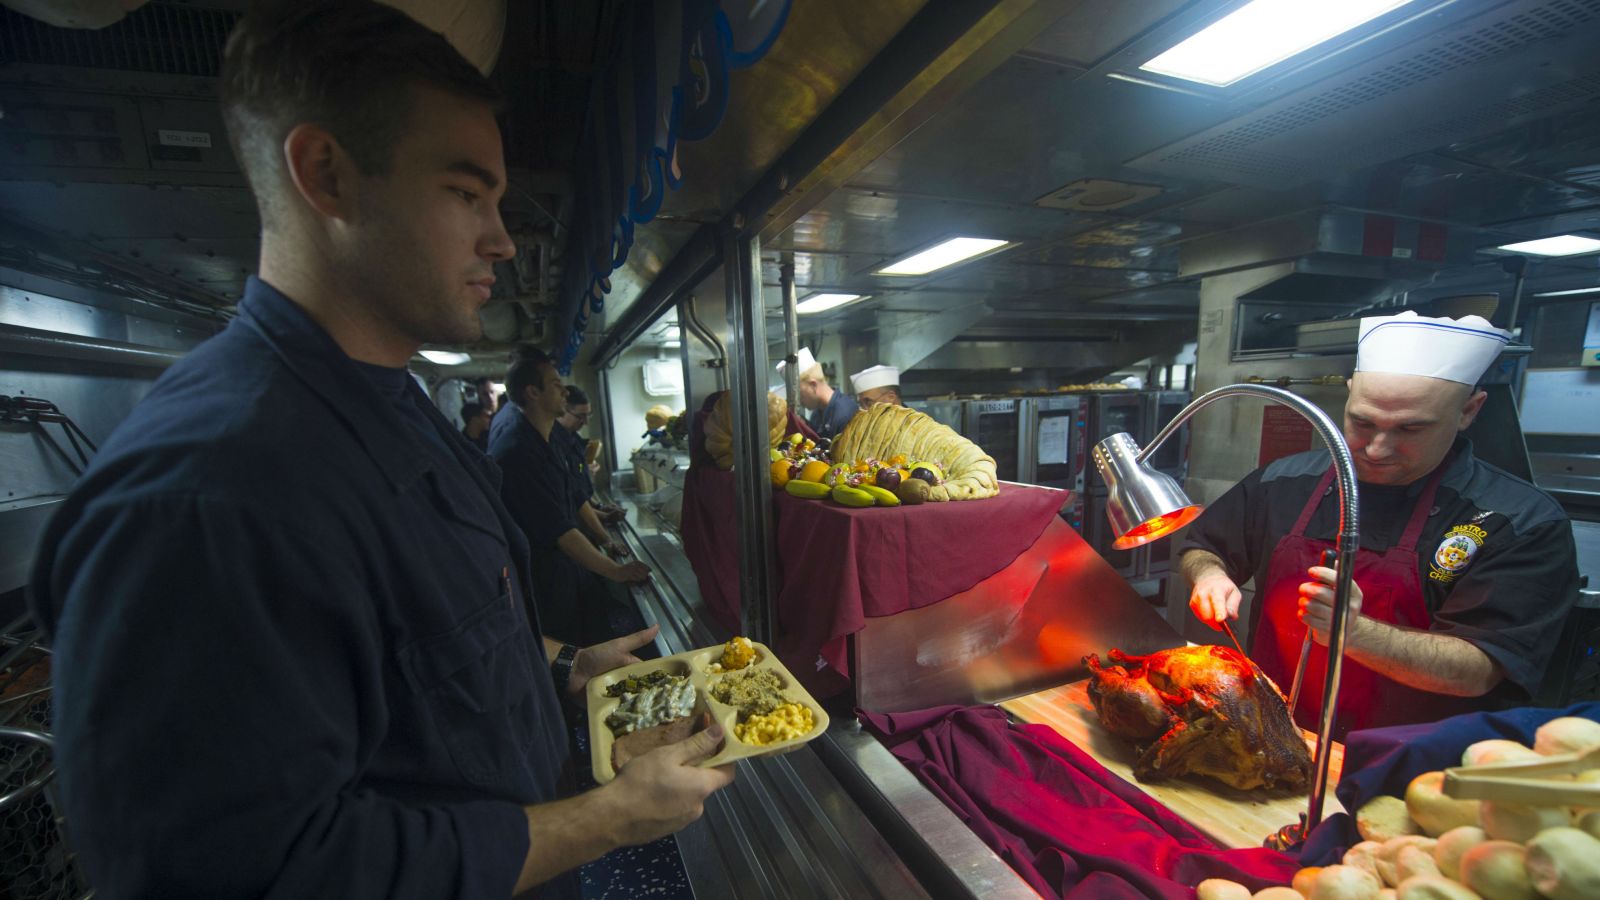 Feeding the Navy on Thanksgiving